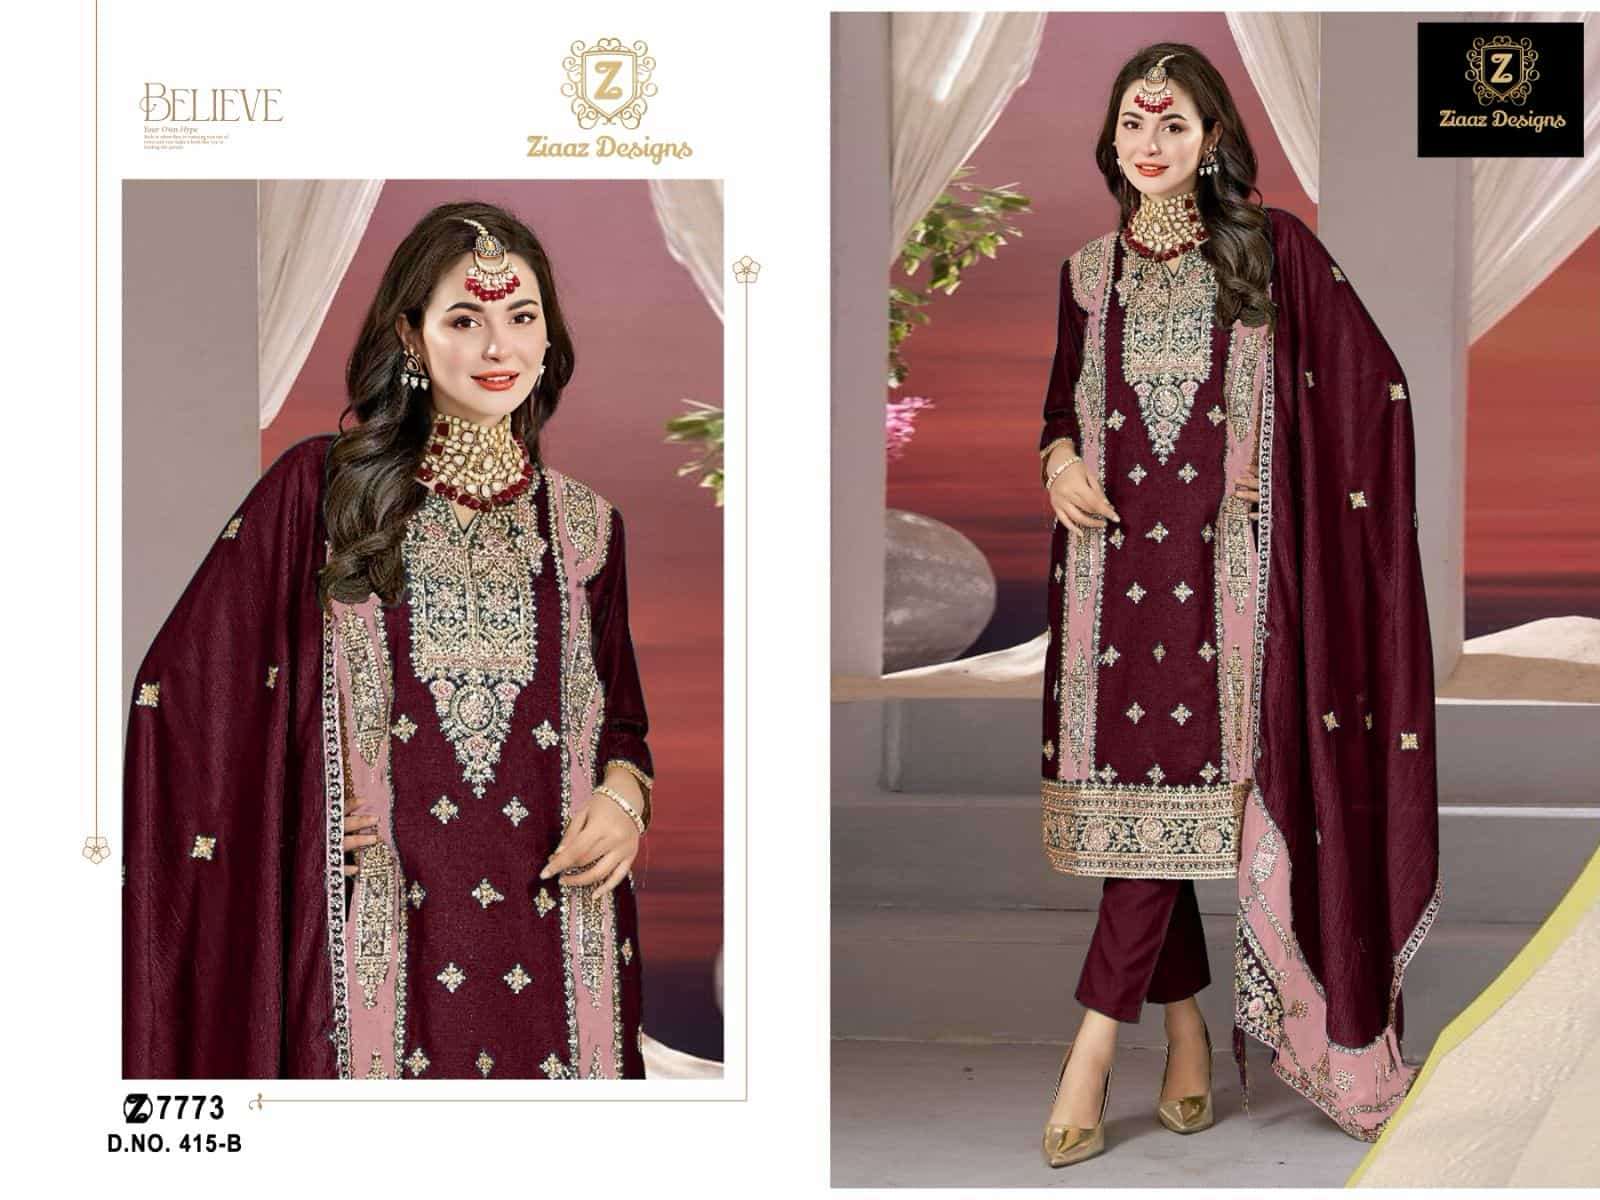 Ziaaz Designs 415 B Latest Embroidered Designer Style Salwar Kameez Collection 